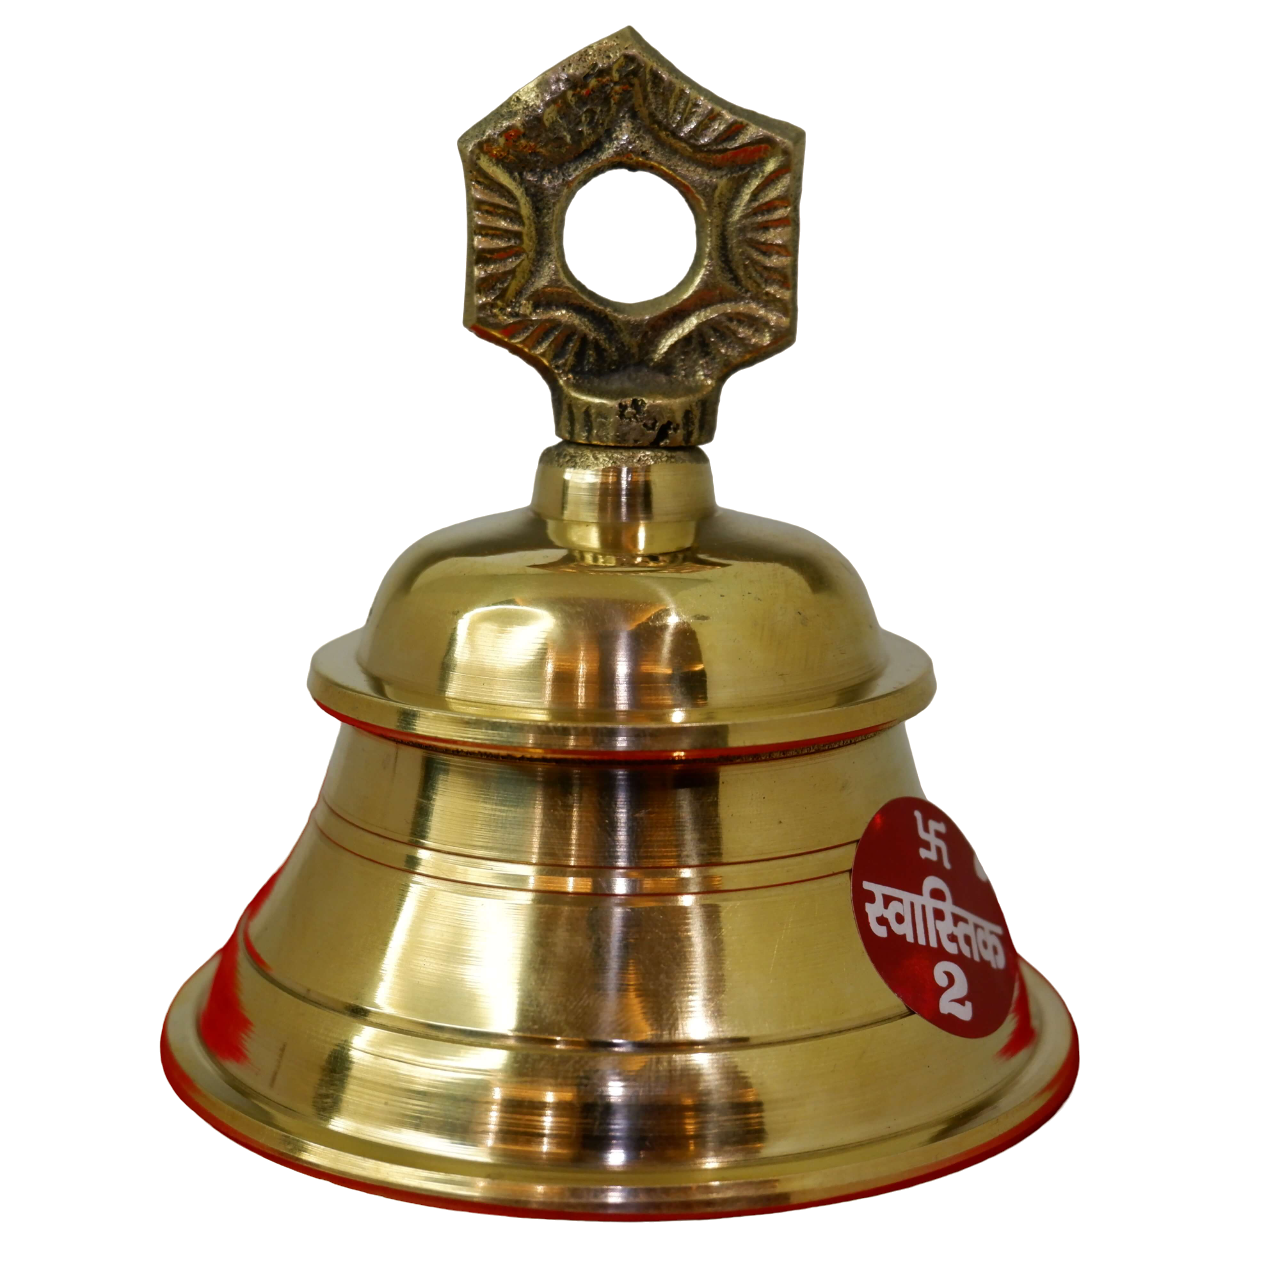 Mandir Ghanta, Pooja Bell, Hanging Bell for Mandir (Large)